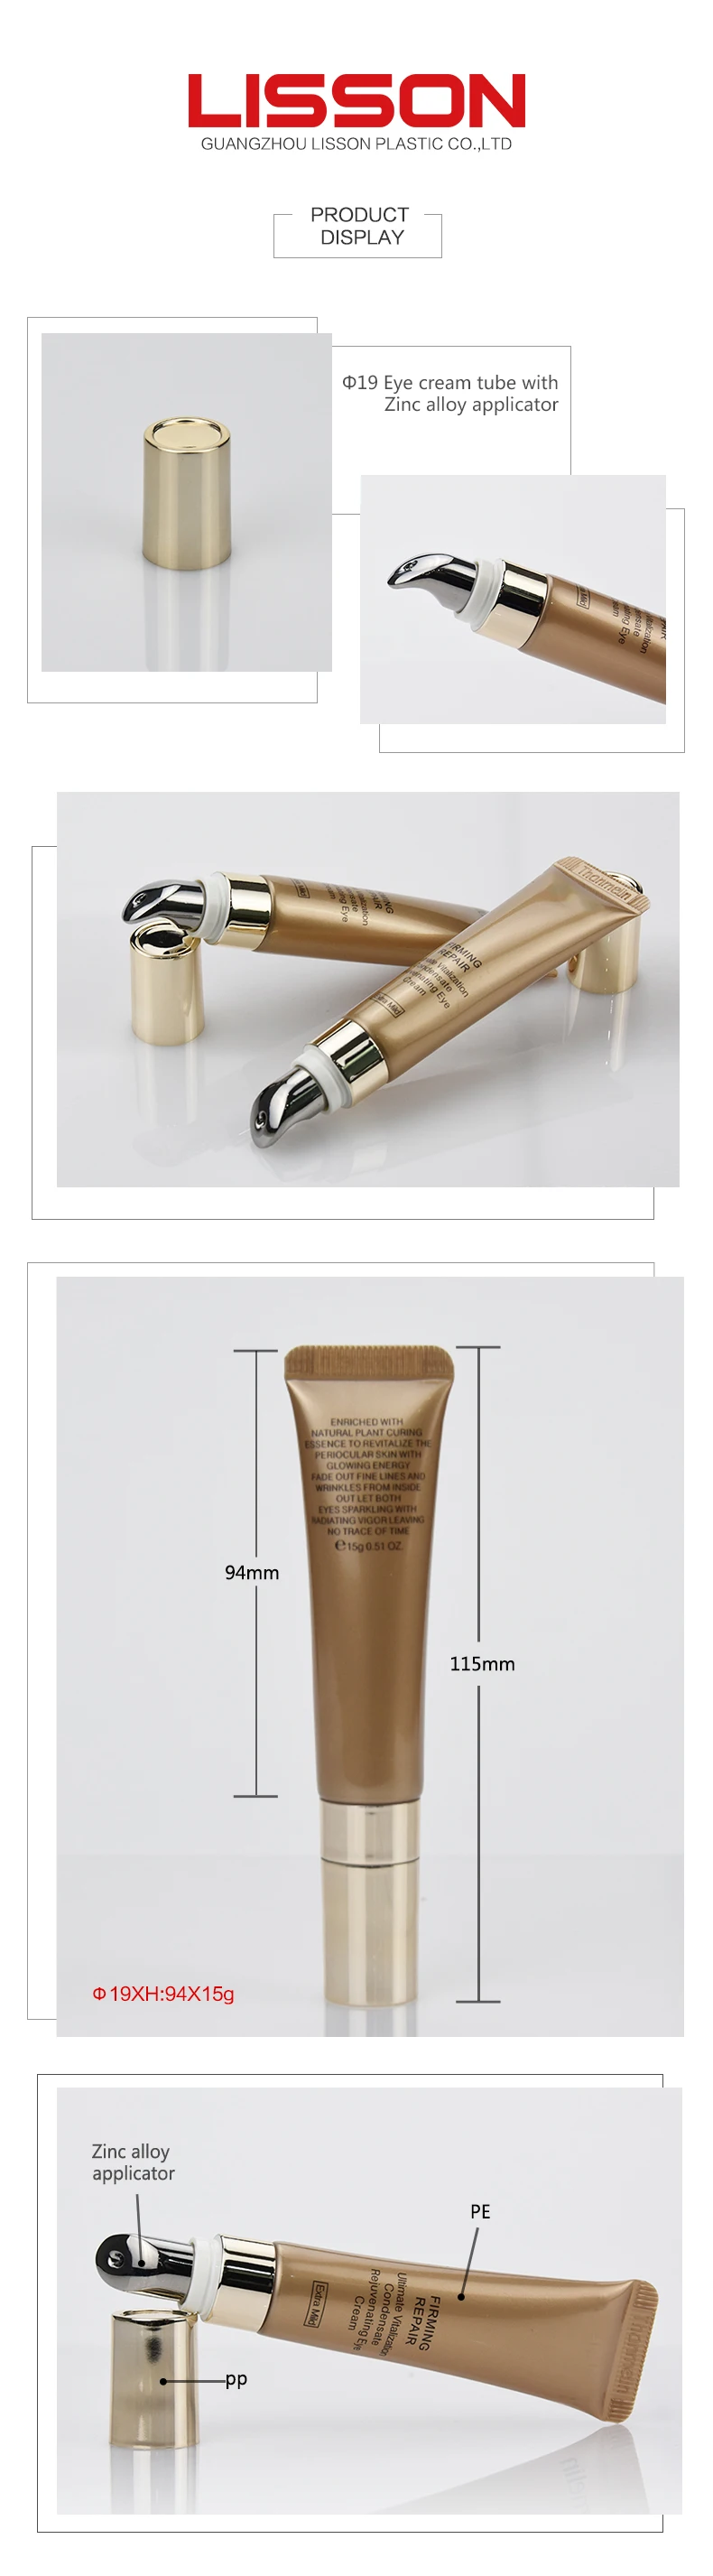 20g Electric massage applicator head zinc-alloy material PE plastic tube for eye cream